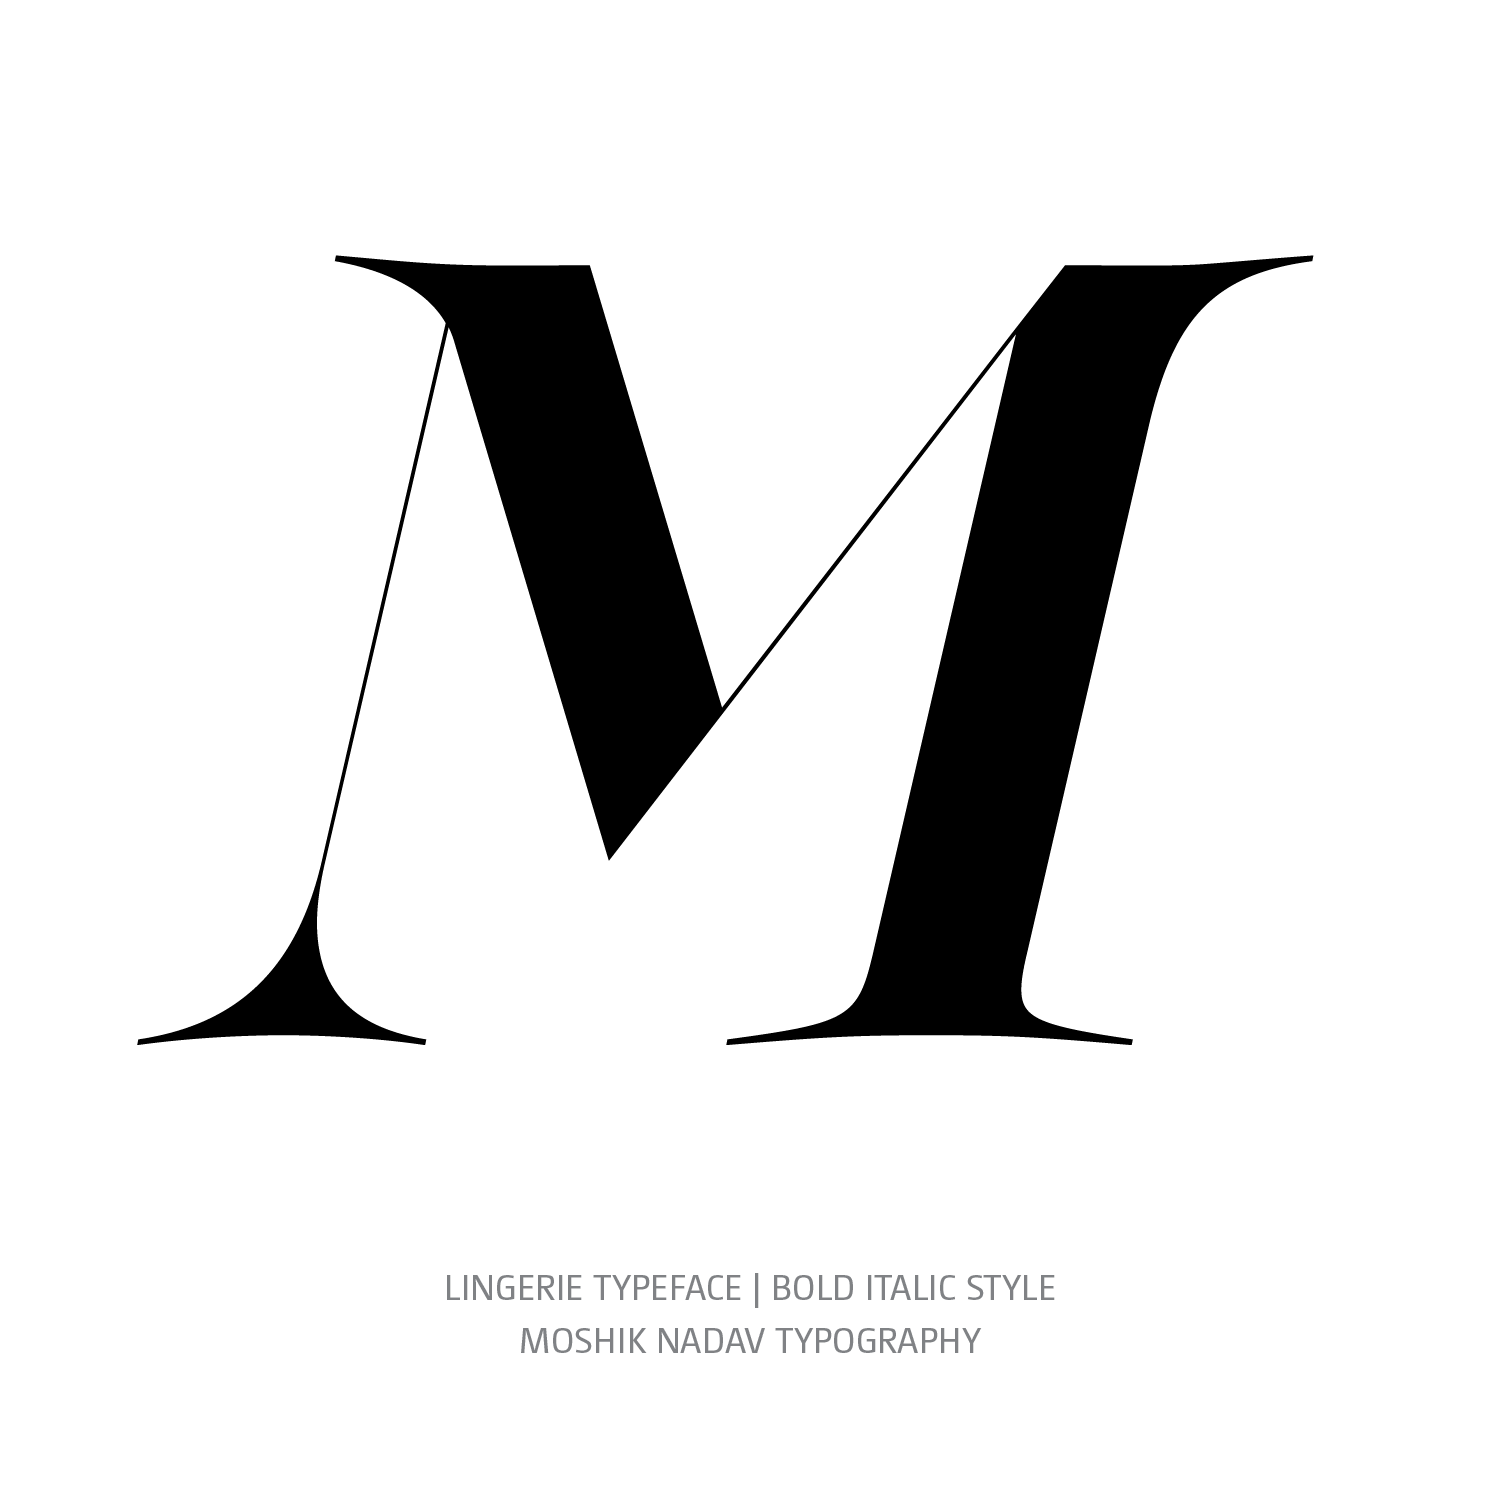 Lingerie Typeface Bold Italic M